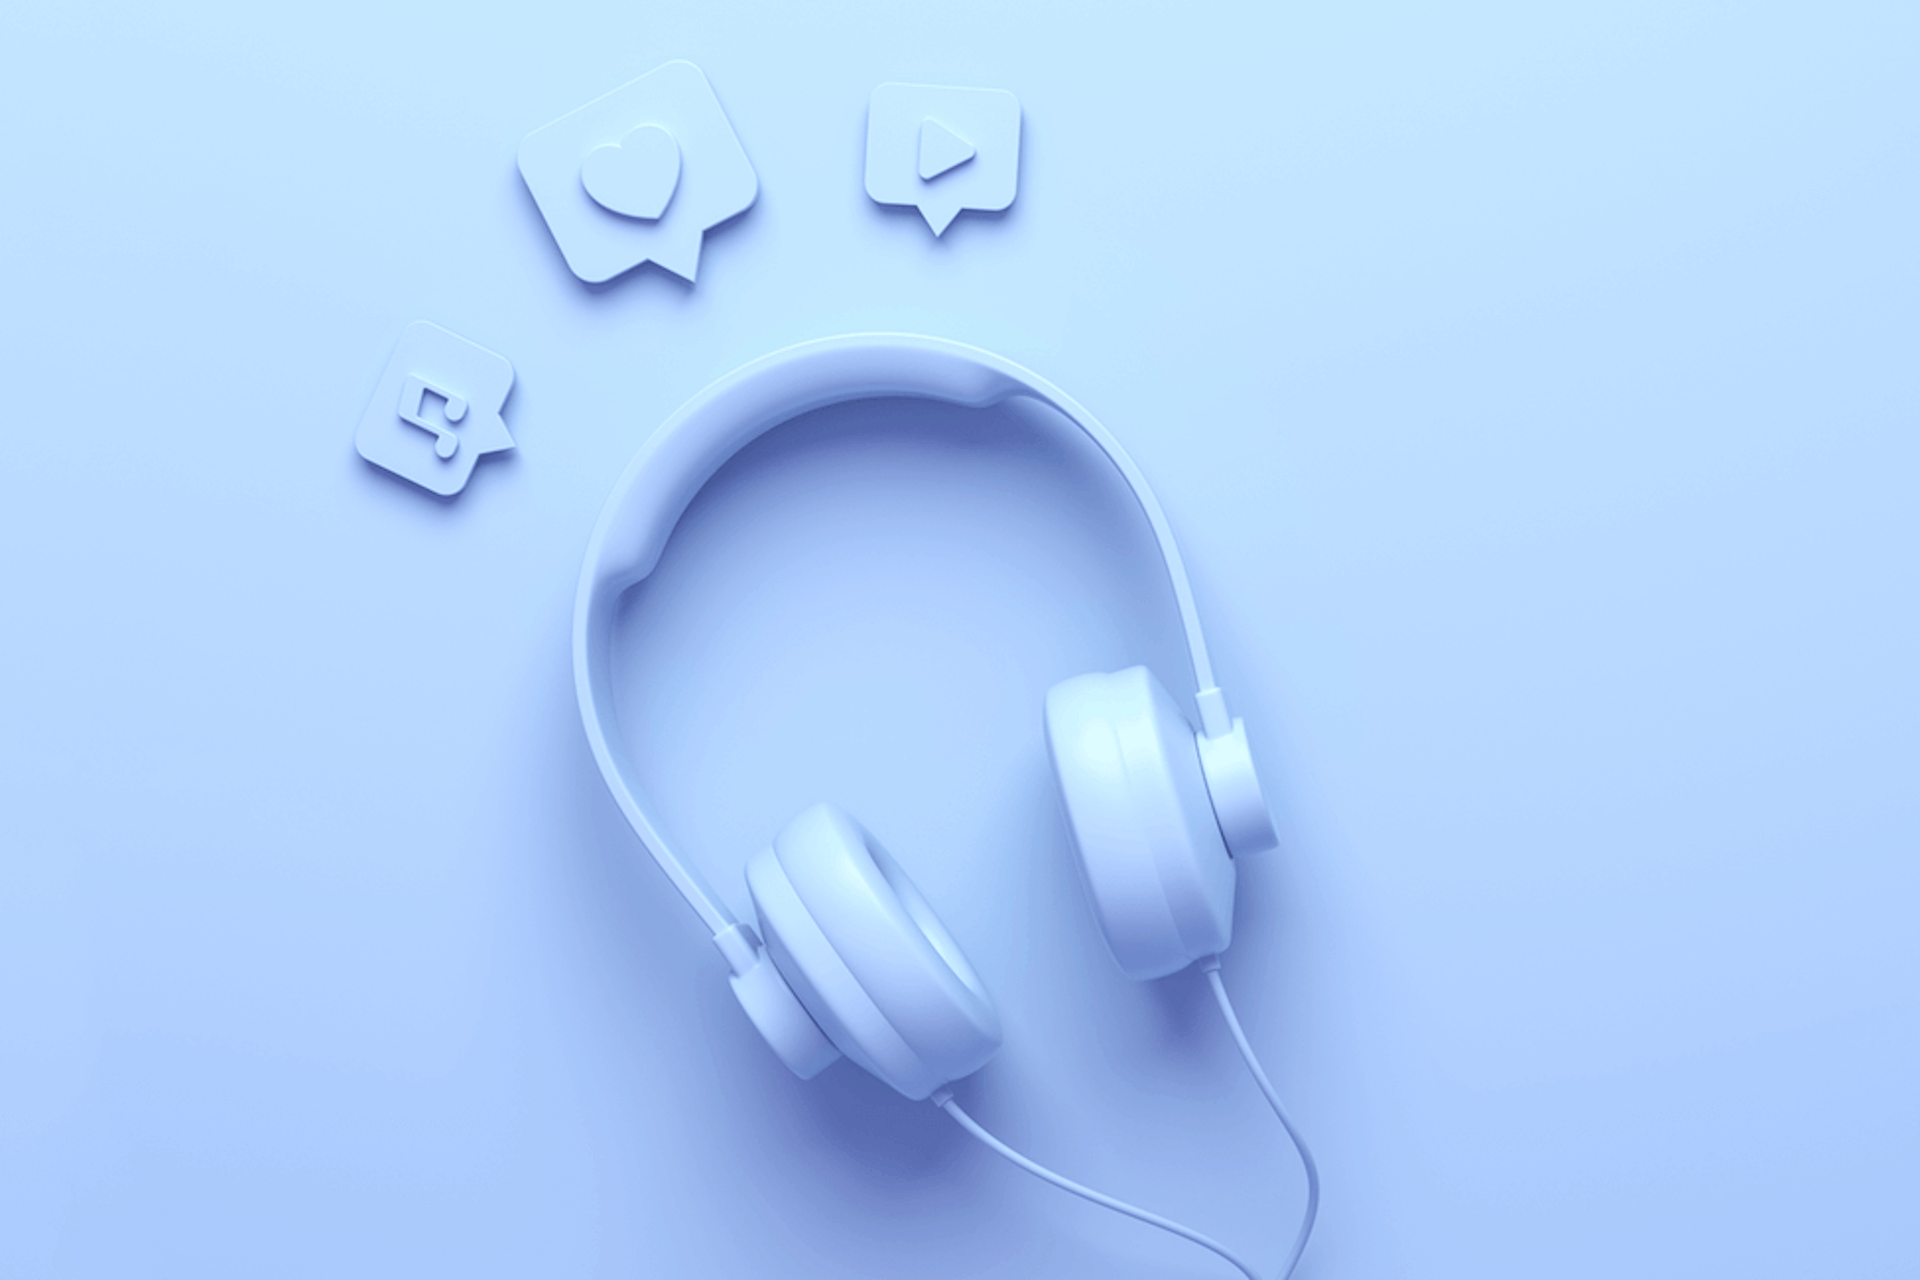 3D Illustration von blauen Kopfhörern als Verbildlichung von Social Listening / Social Media Monitoring